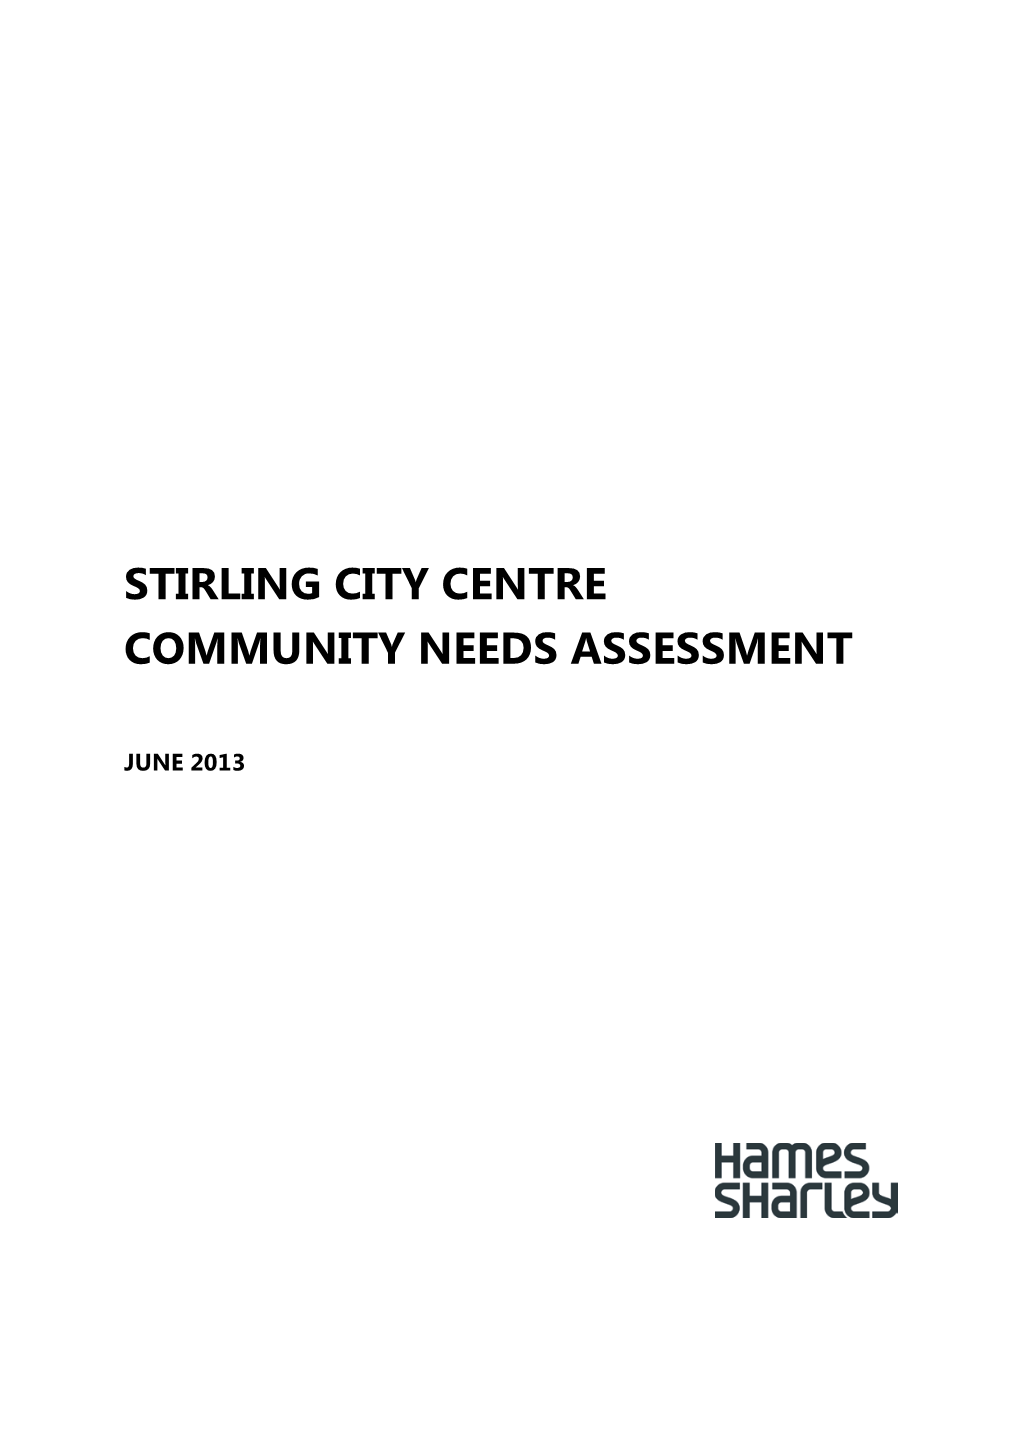 Stirling City Centre Community Needs Assessment